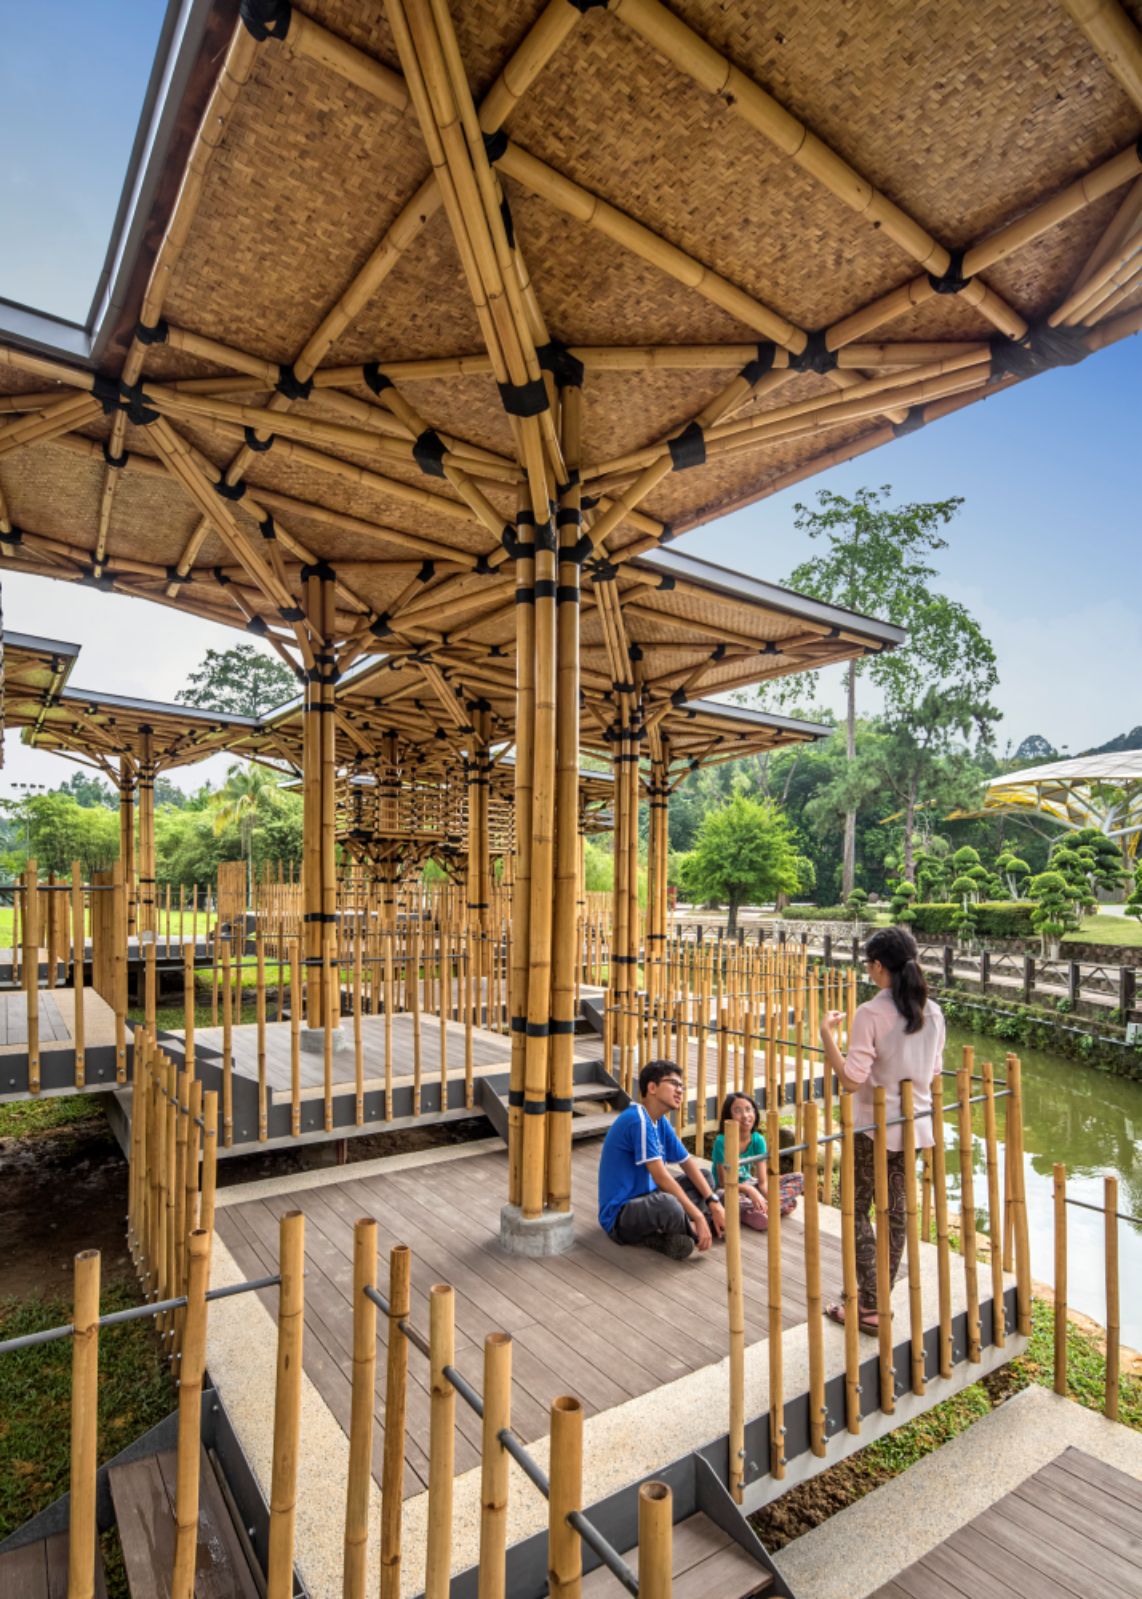 The Bamboo Playhouse